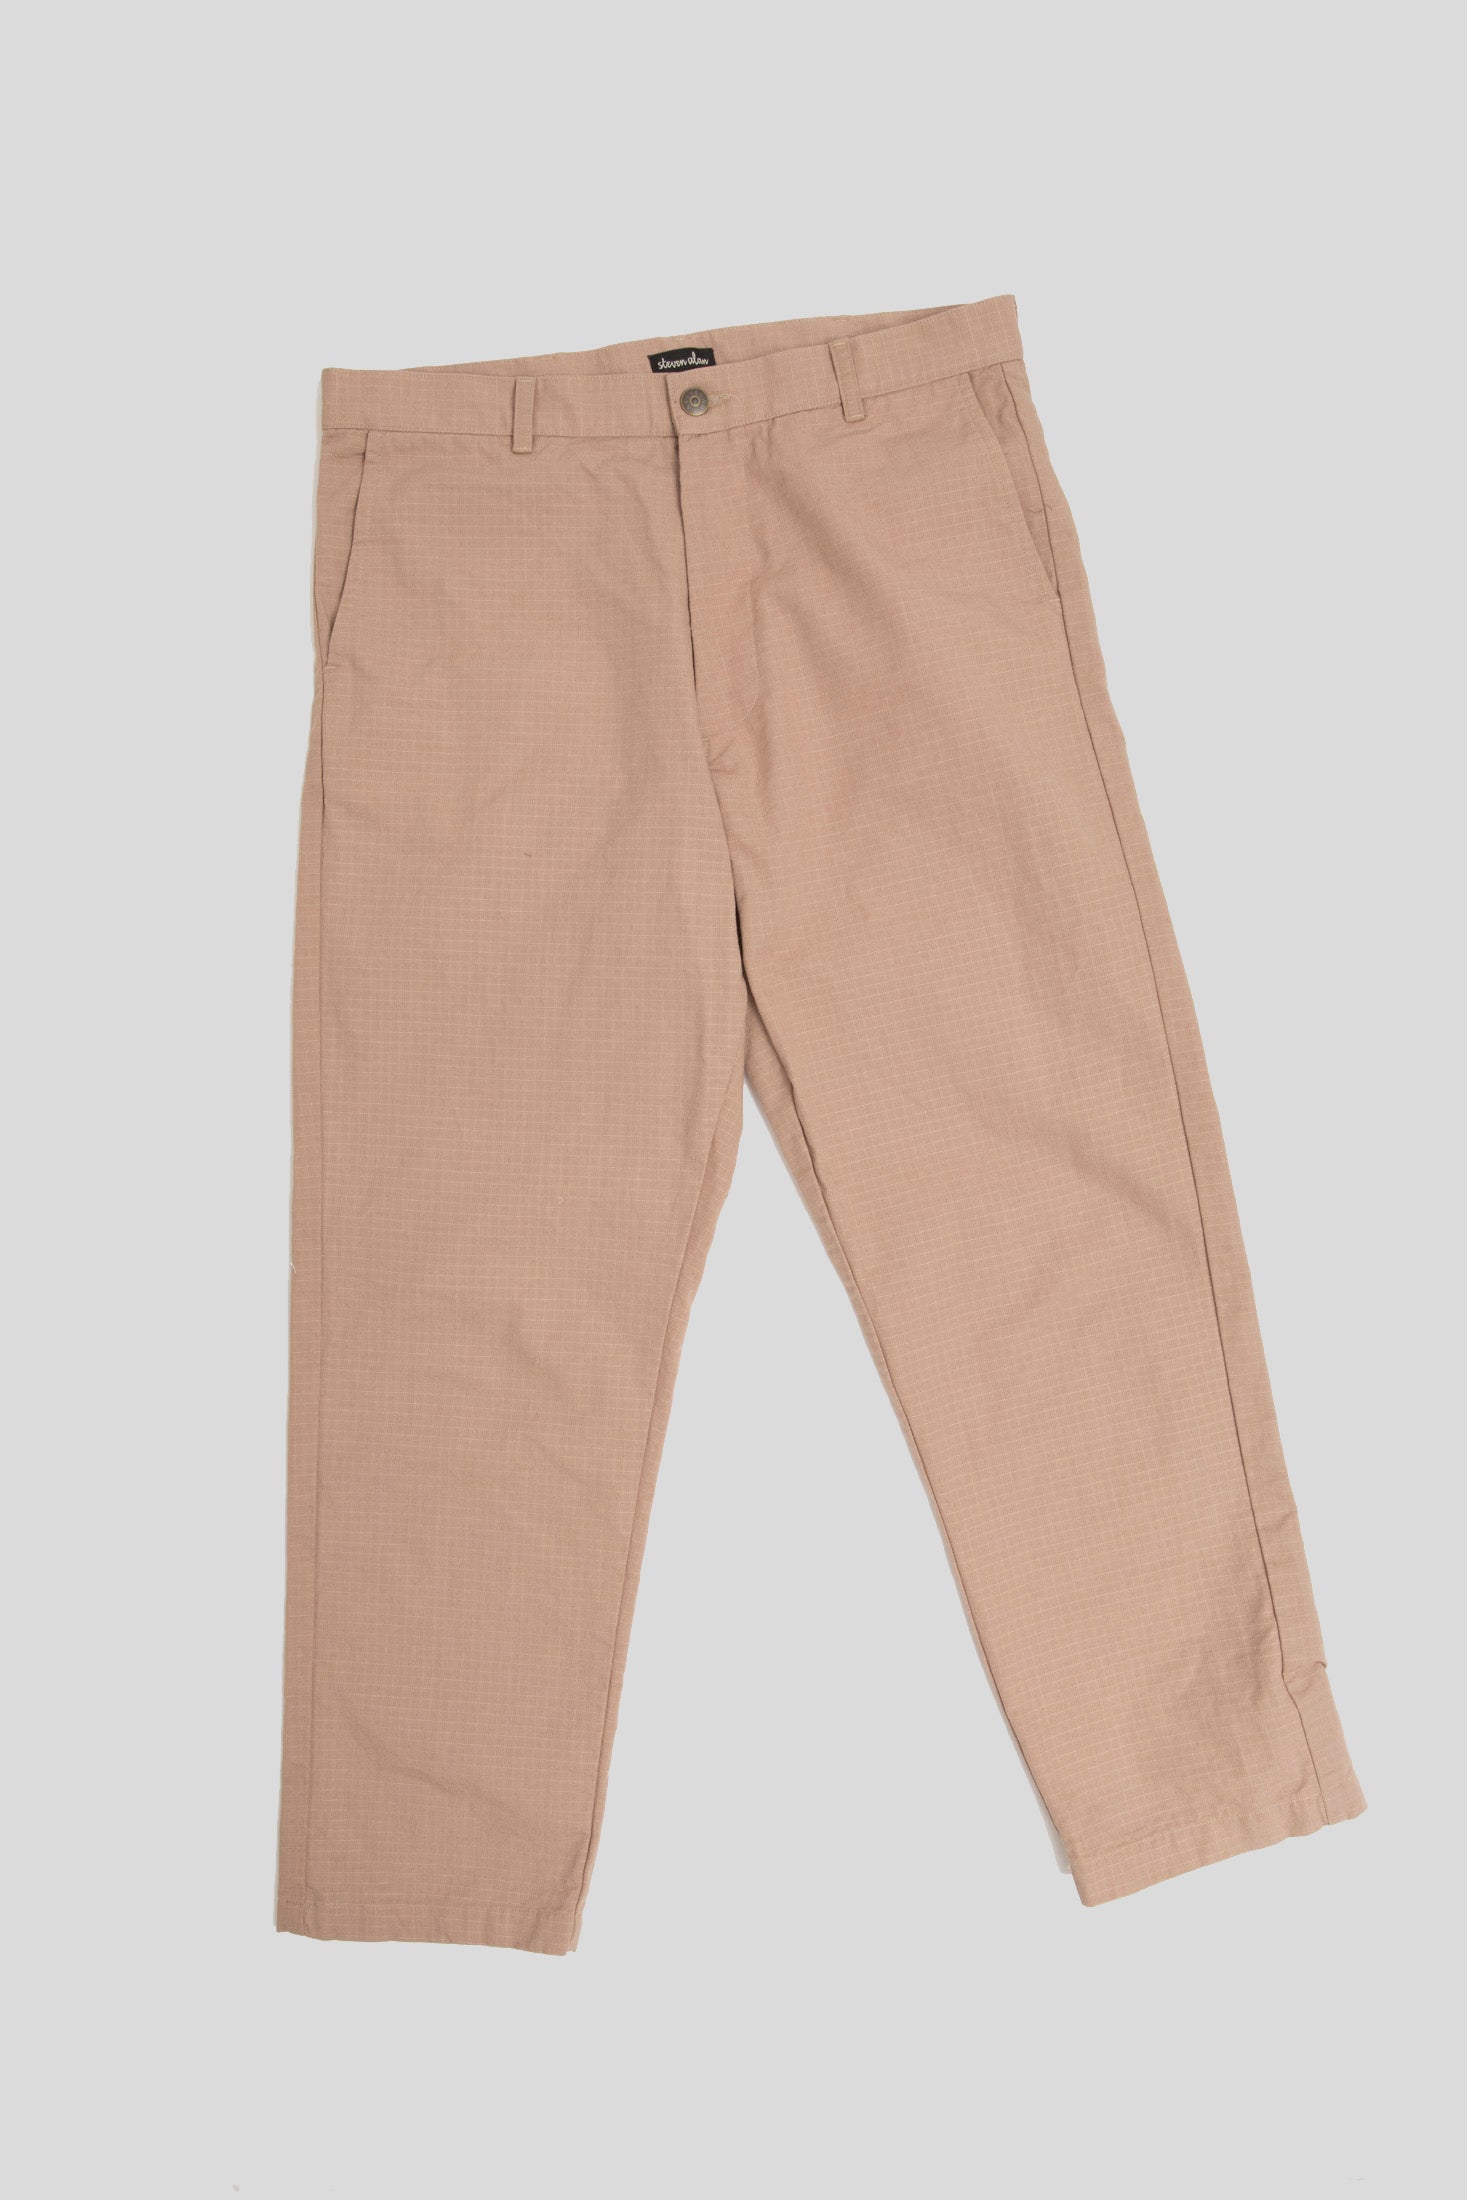 Front flat lay of maker pants